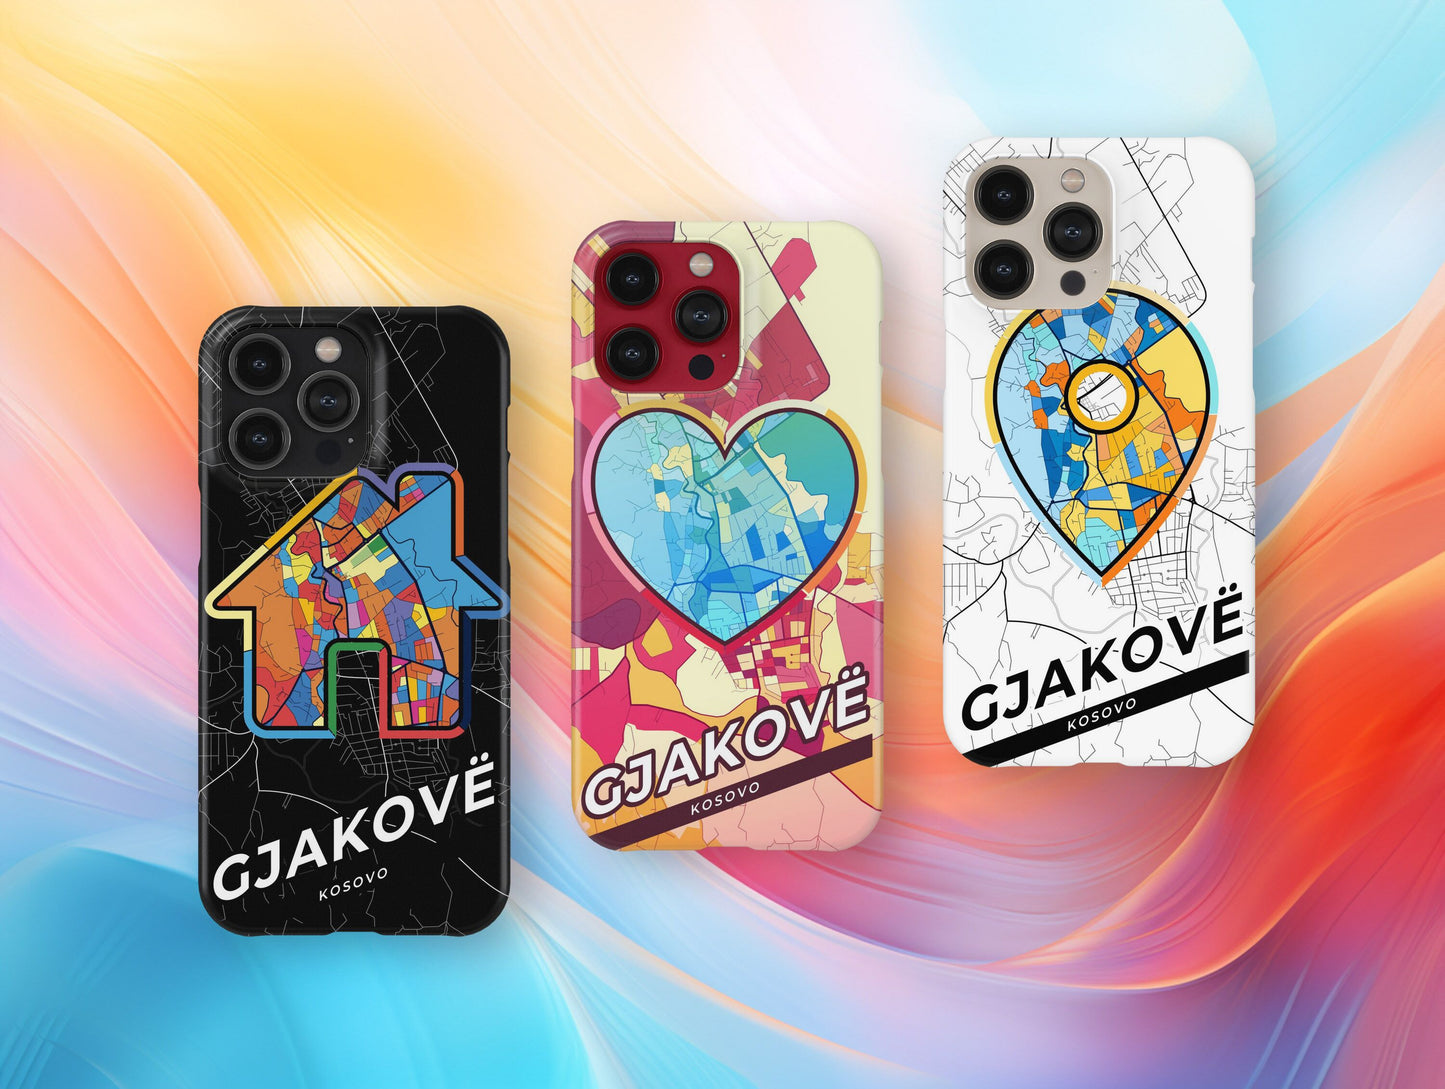 Gjakovë / Đakovica Kosovo slim phone case with colorful icon. Birthday, wedding or housewarming gift. Couple match cases.